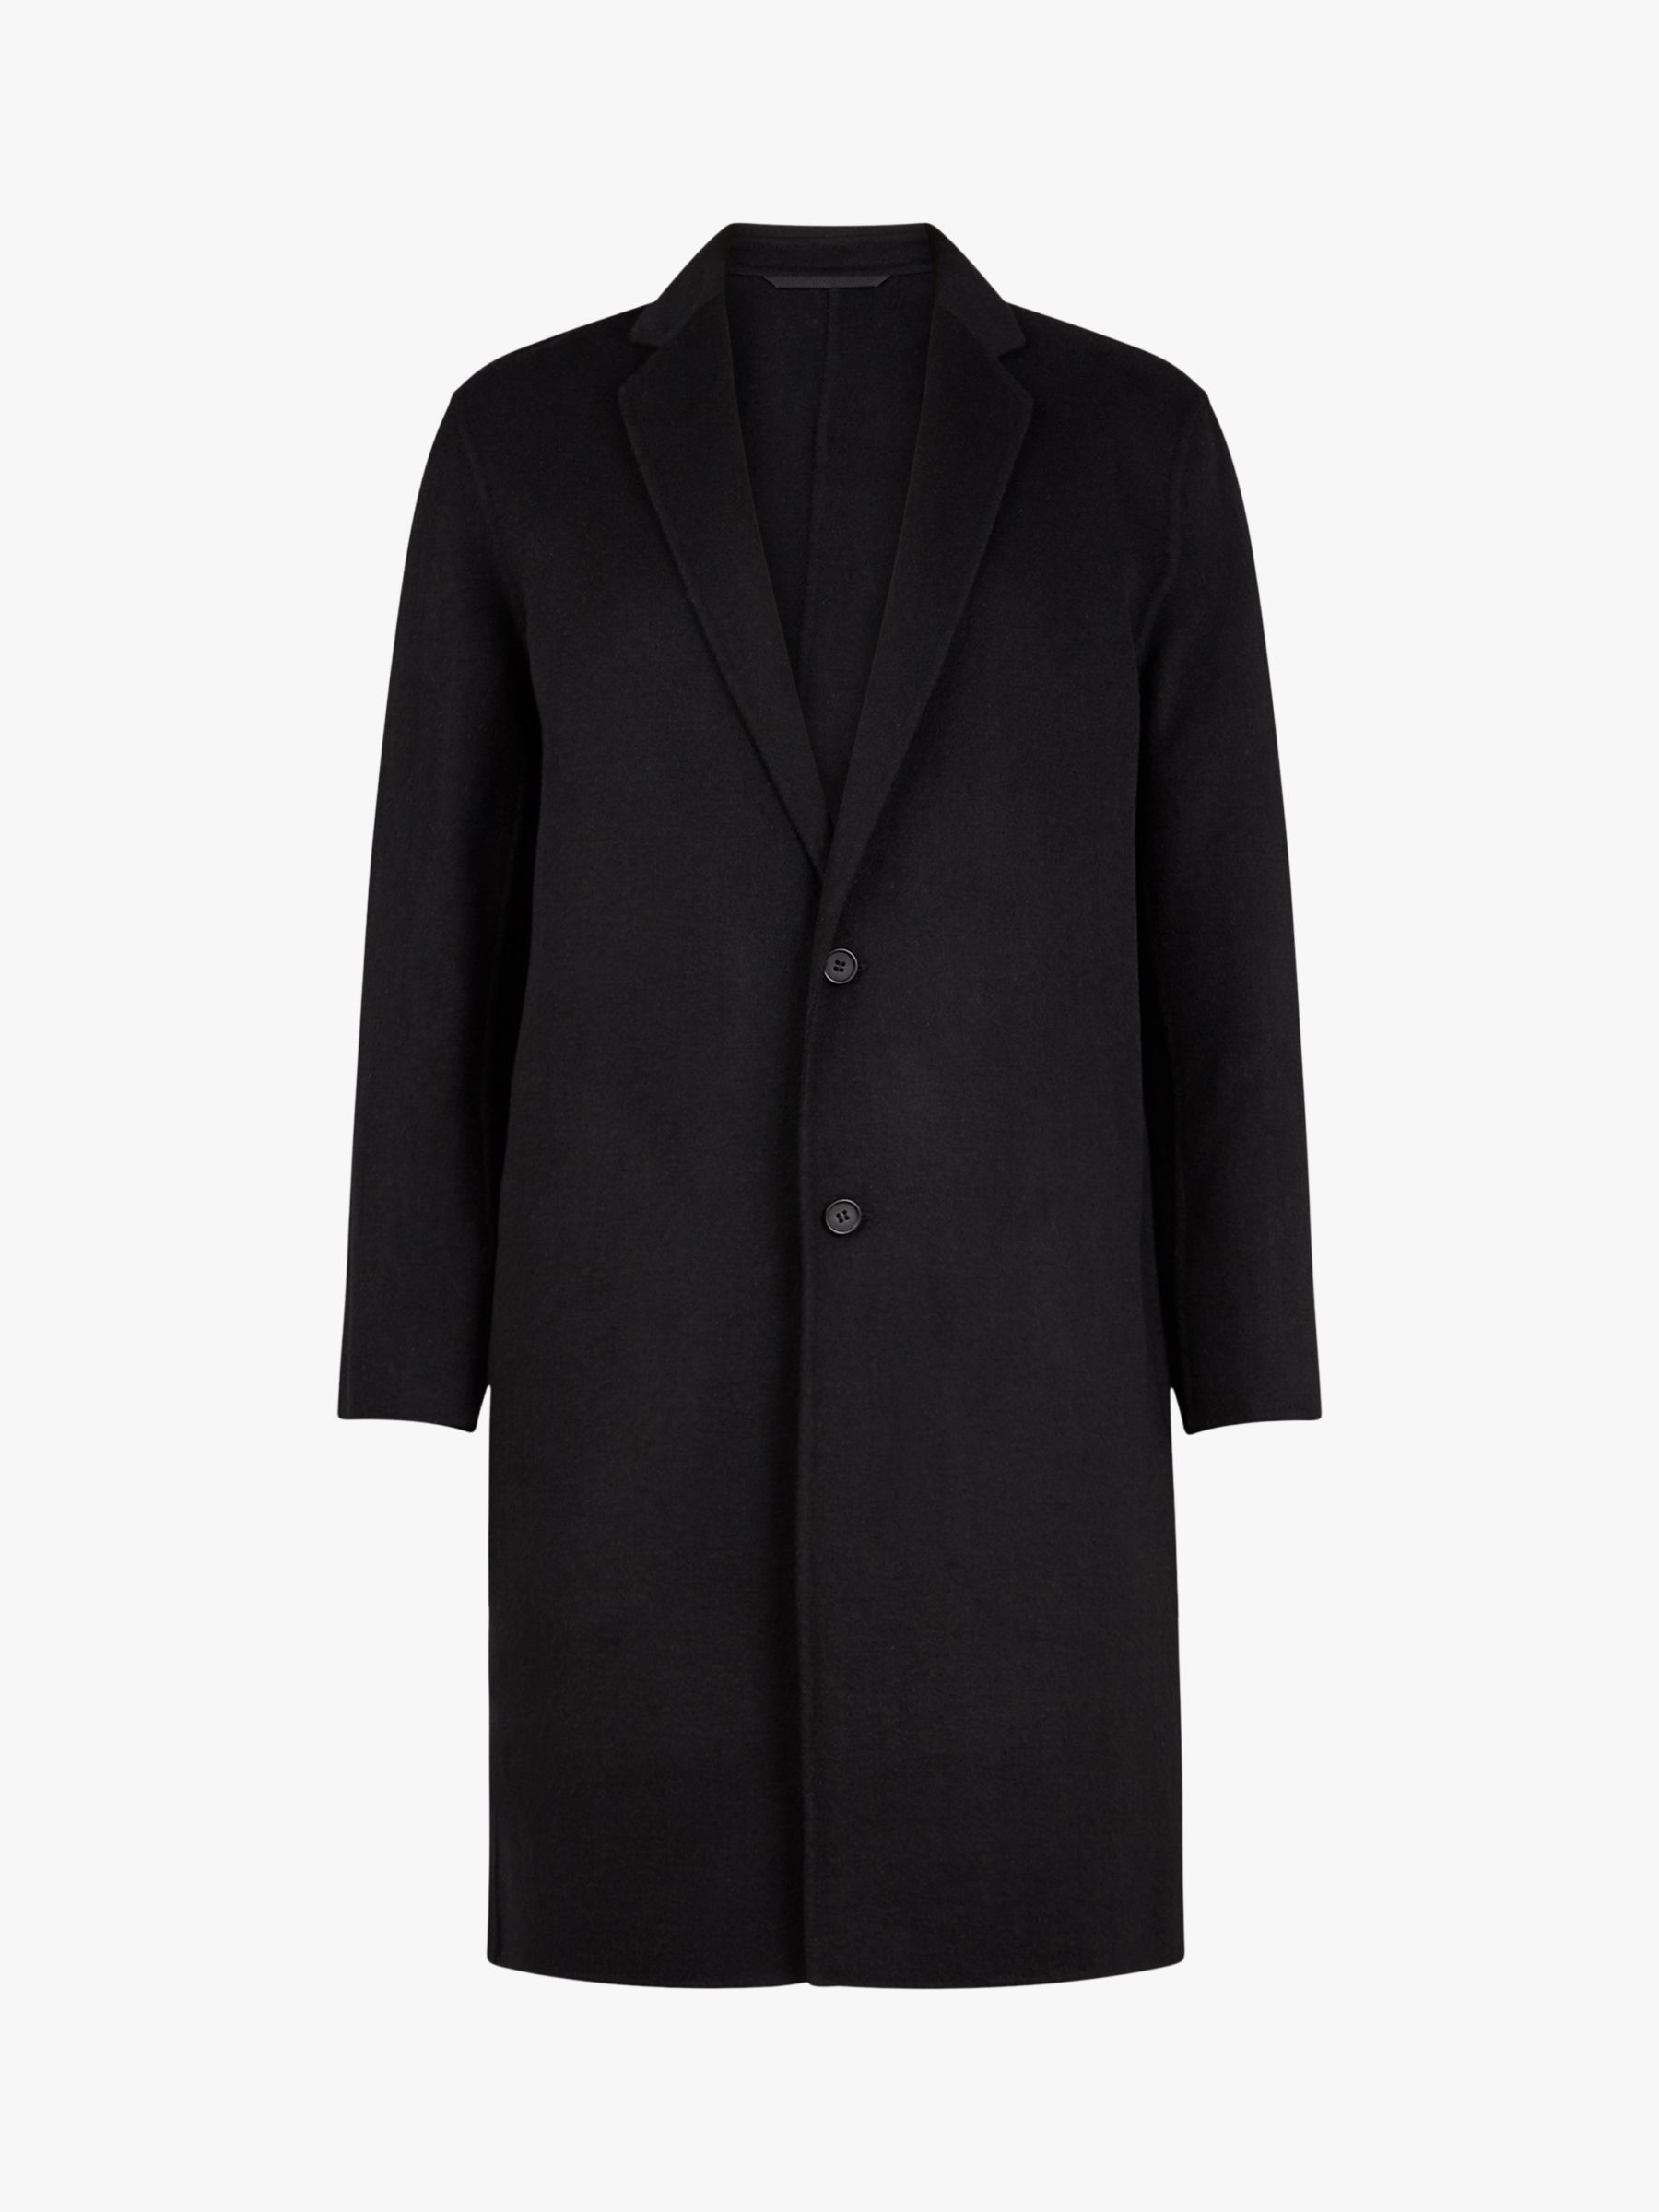 AllSaints Foley Wool-Blend Overcoat, Black at John Lewis & Partners